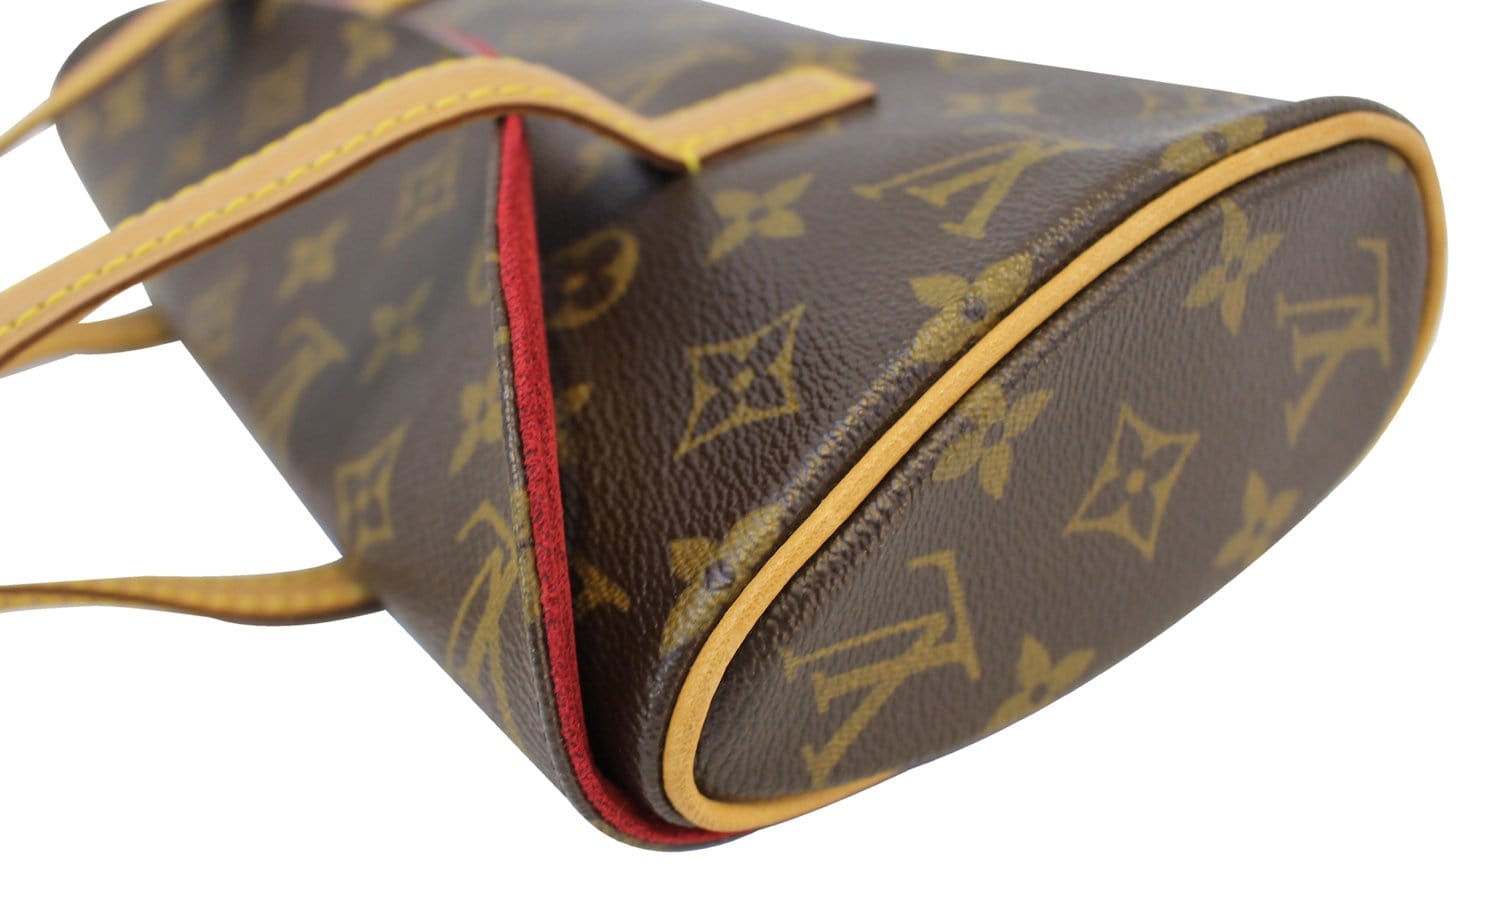 NTWRK - Preloved Louis Vuitton Sonatine Monogram Handbag VI0052 092623 $